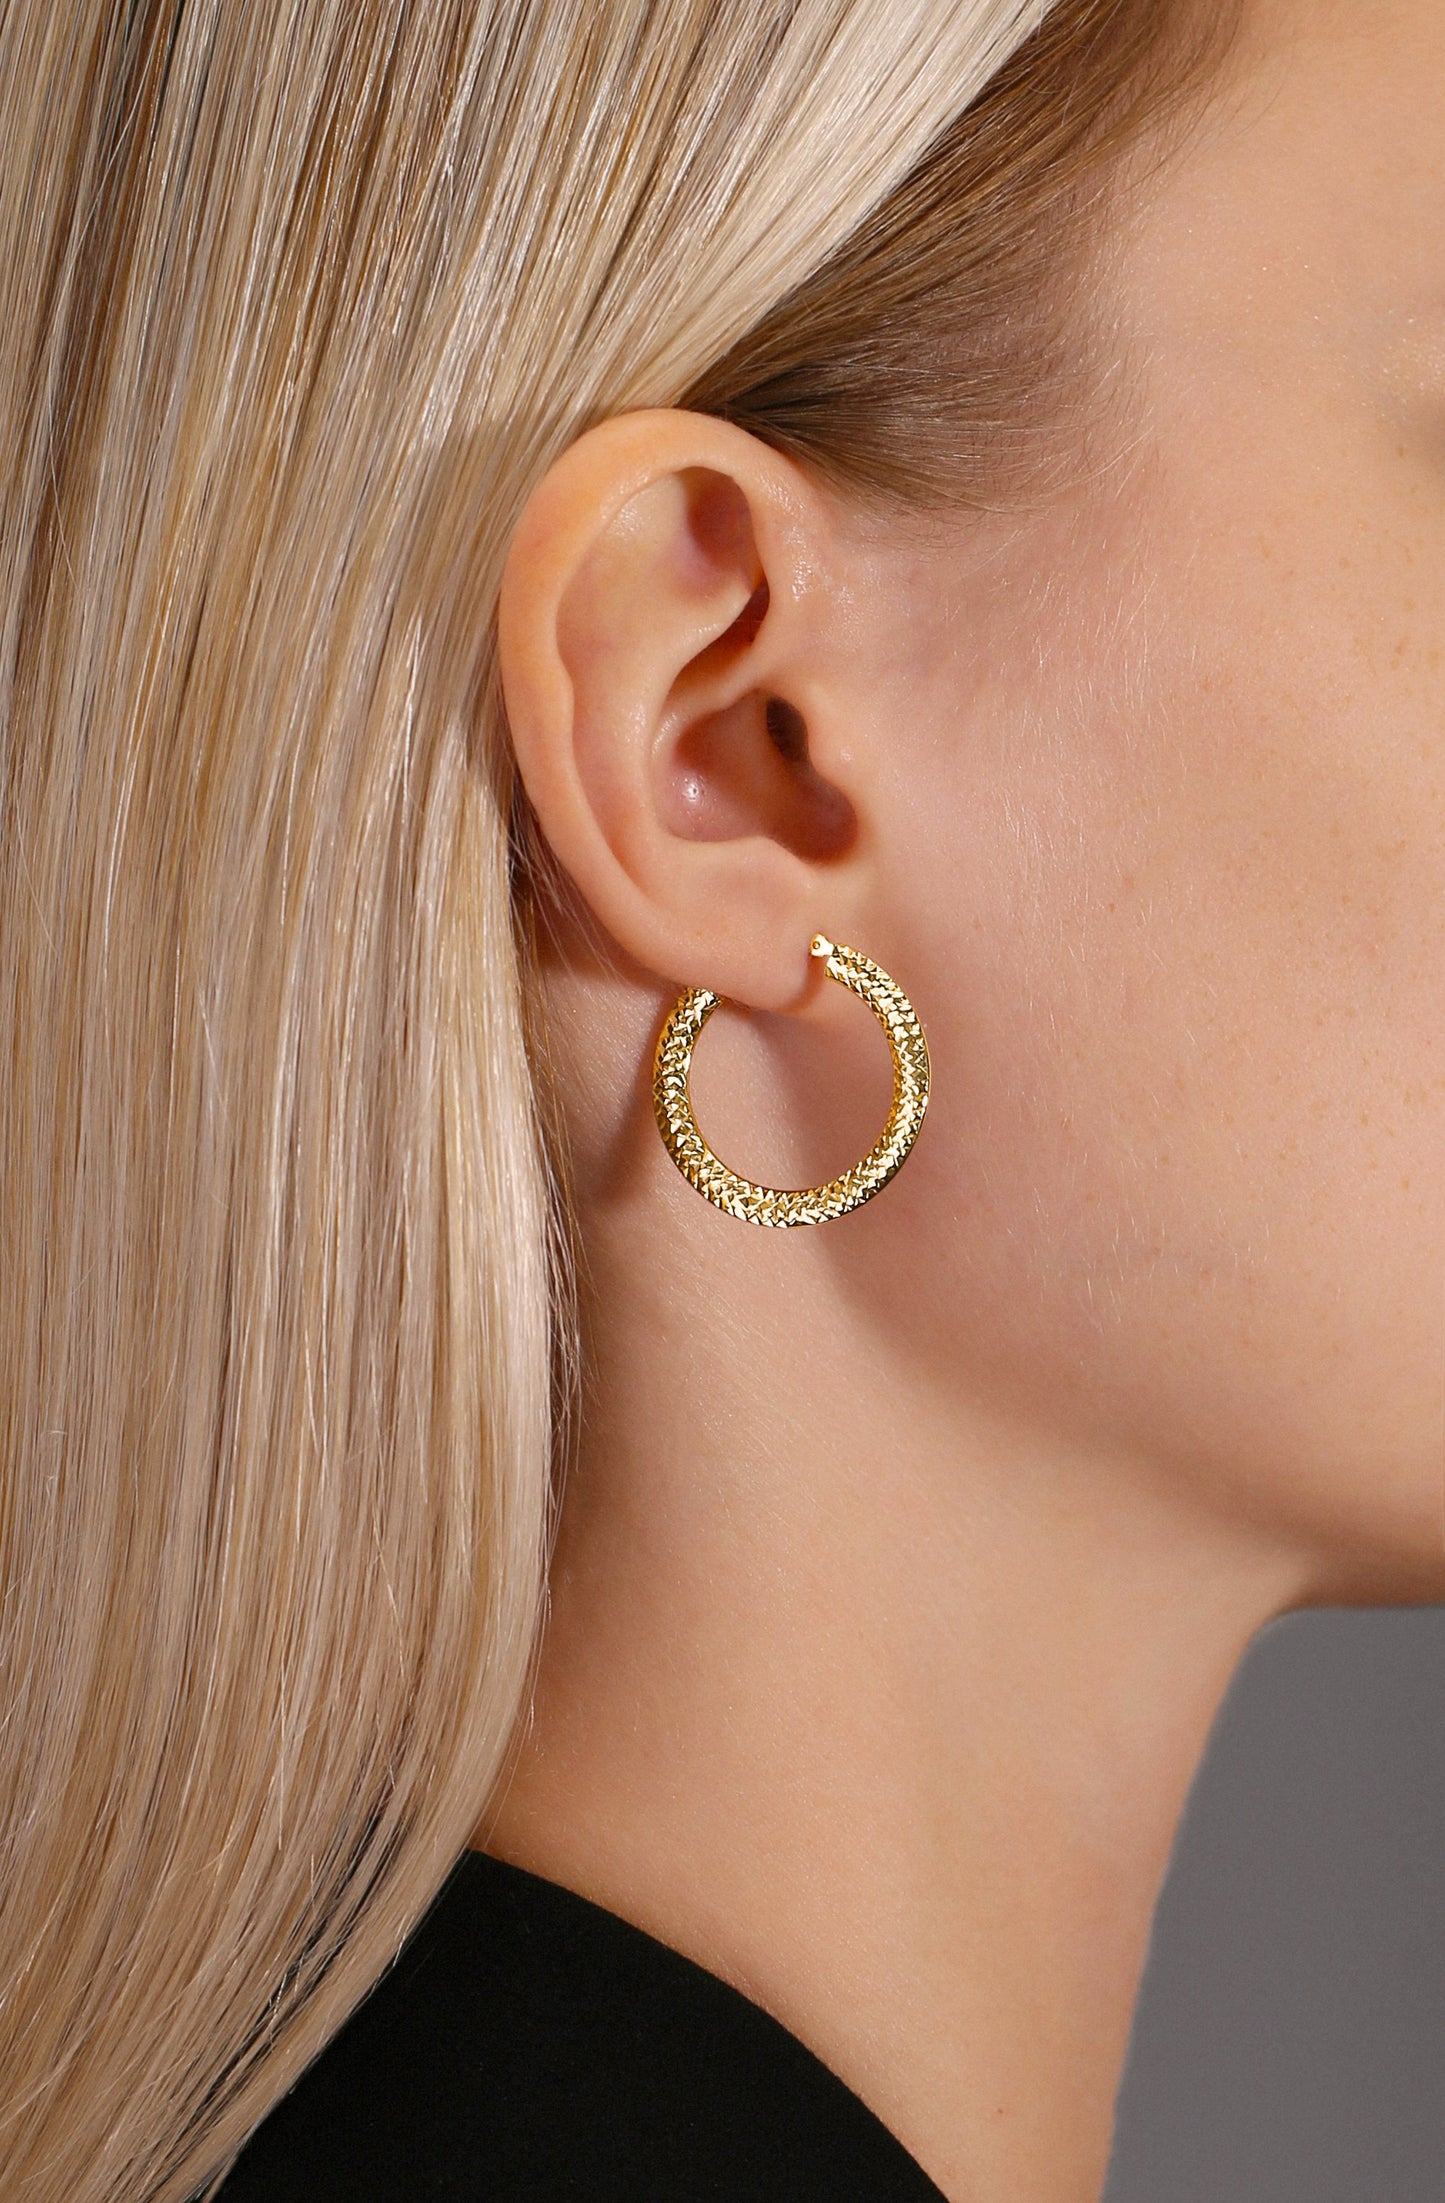 14K Yellow Gold Diamond Cut Flat Hoop Earrings